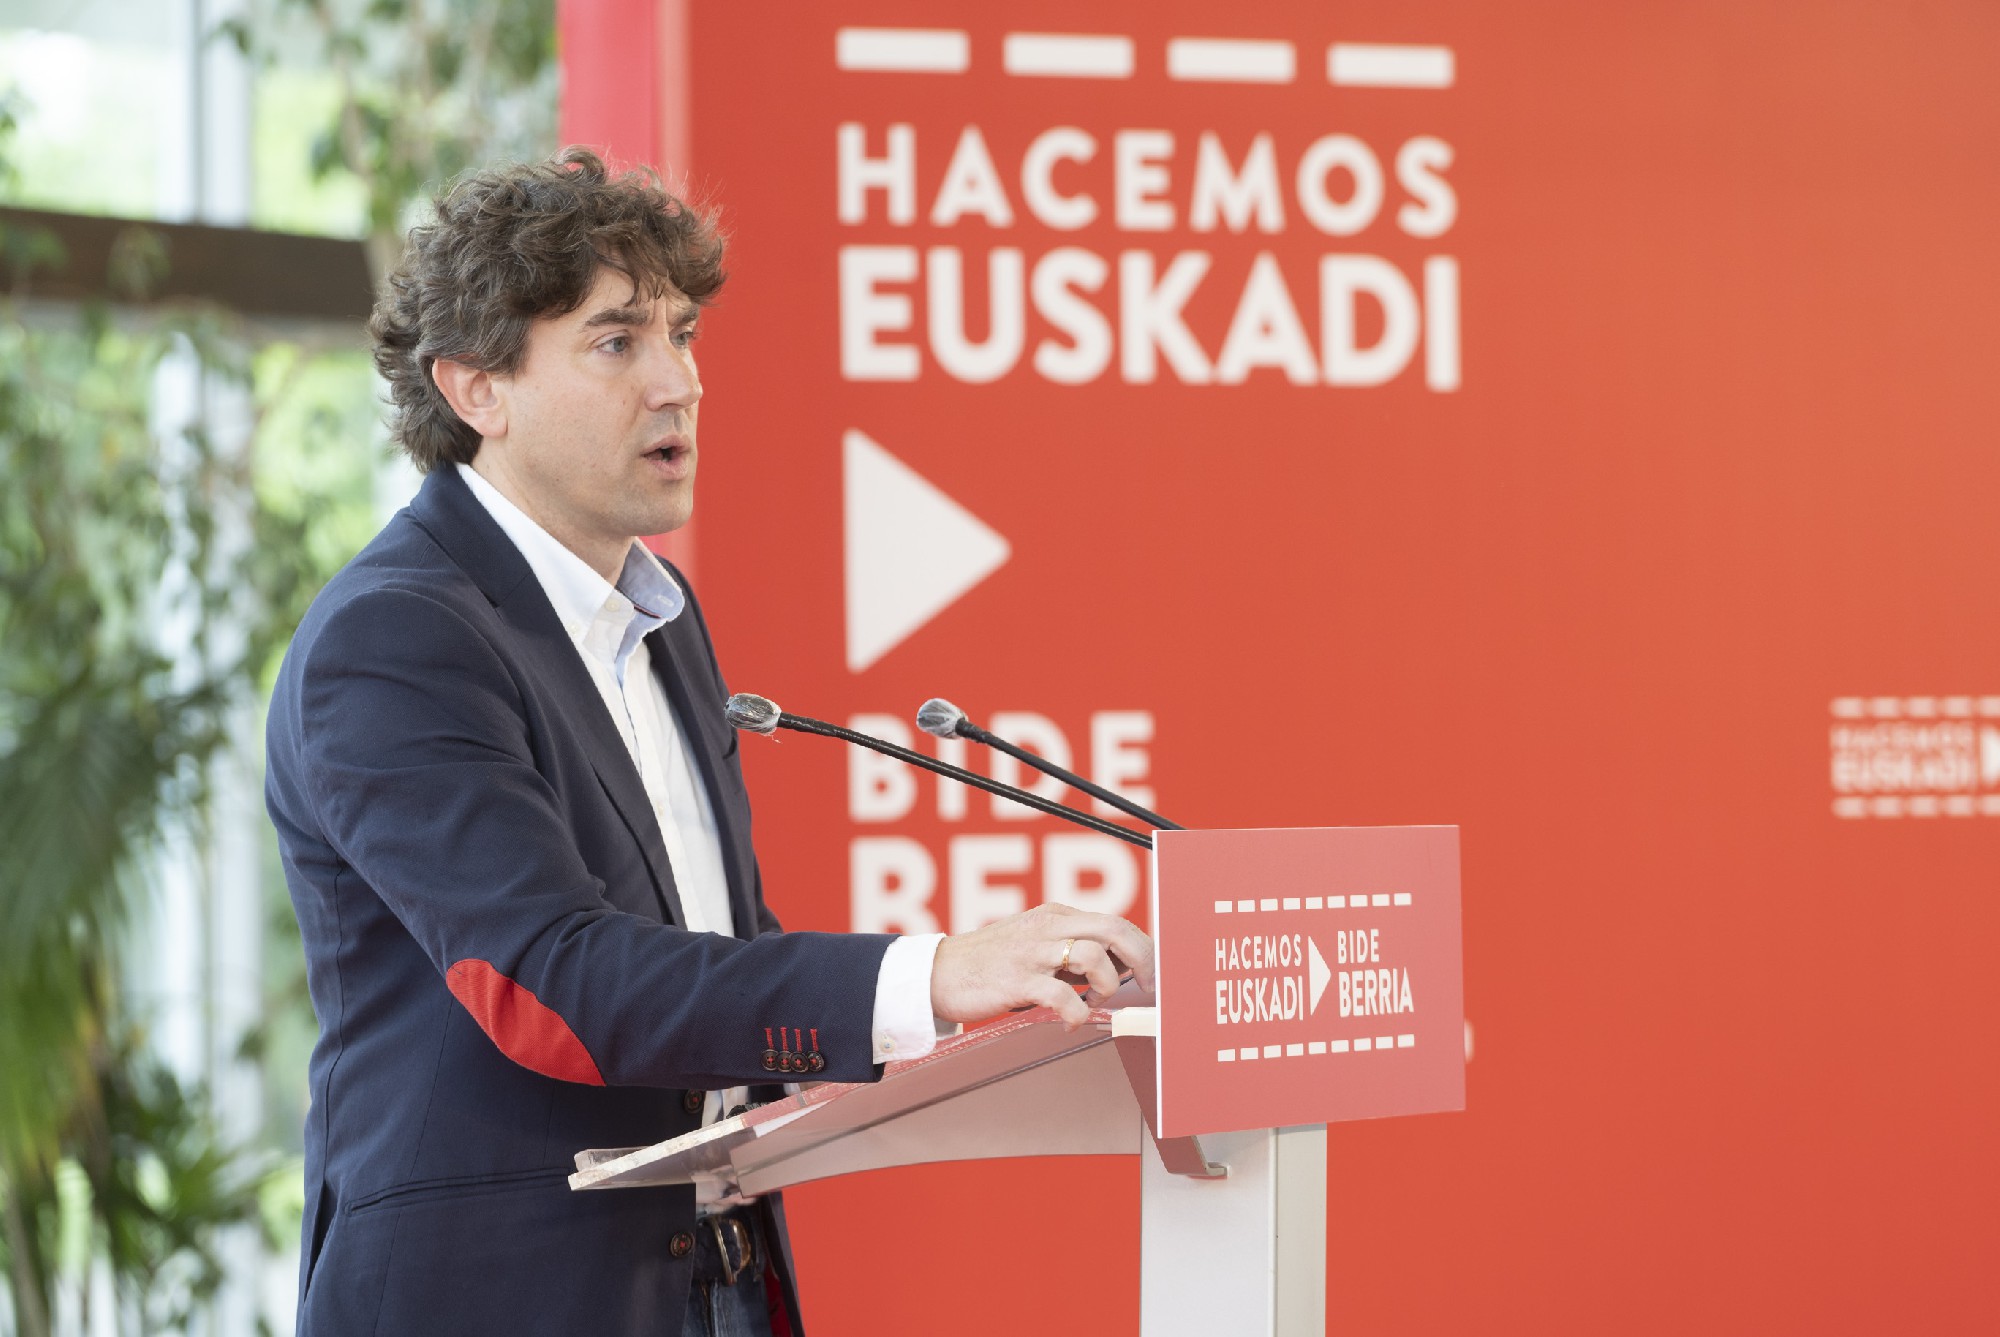 Jornadas Hacemos Euskadi. Bide Berria "Crecer mejor. Hazkunde eredu berria" | Foto: Socialistas Vascos